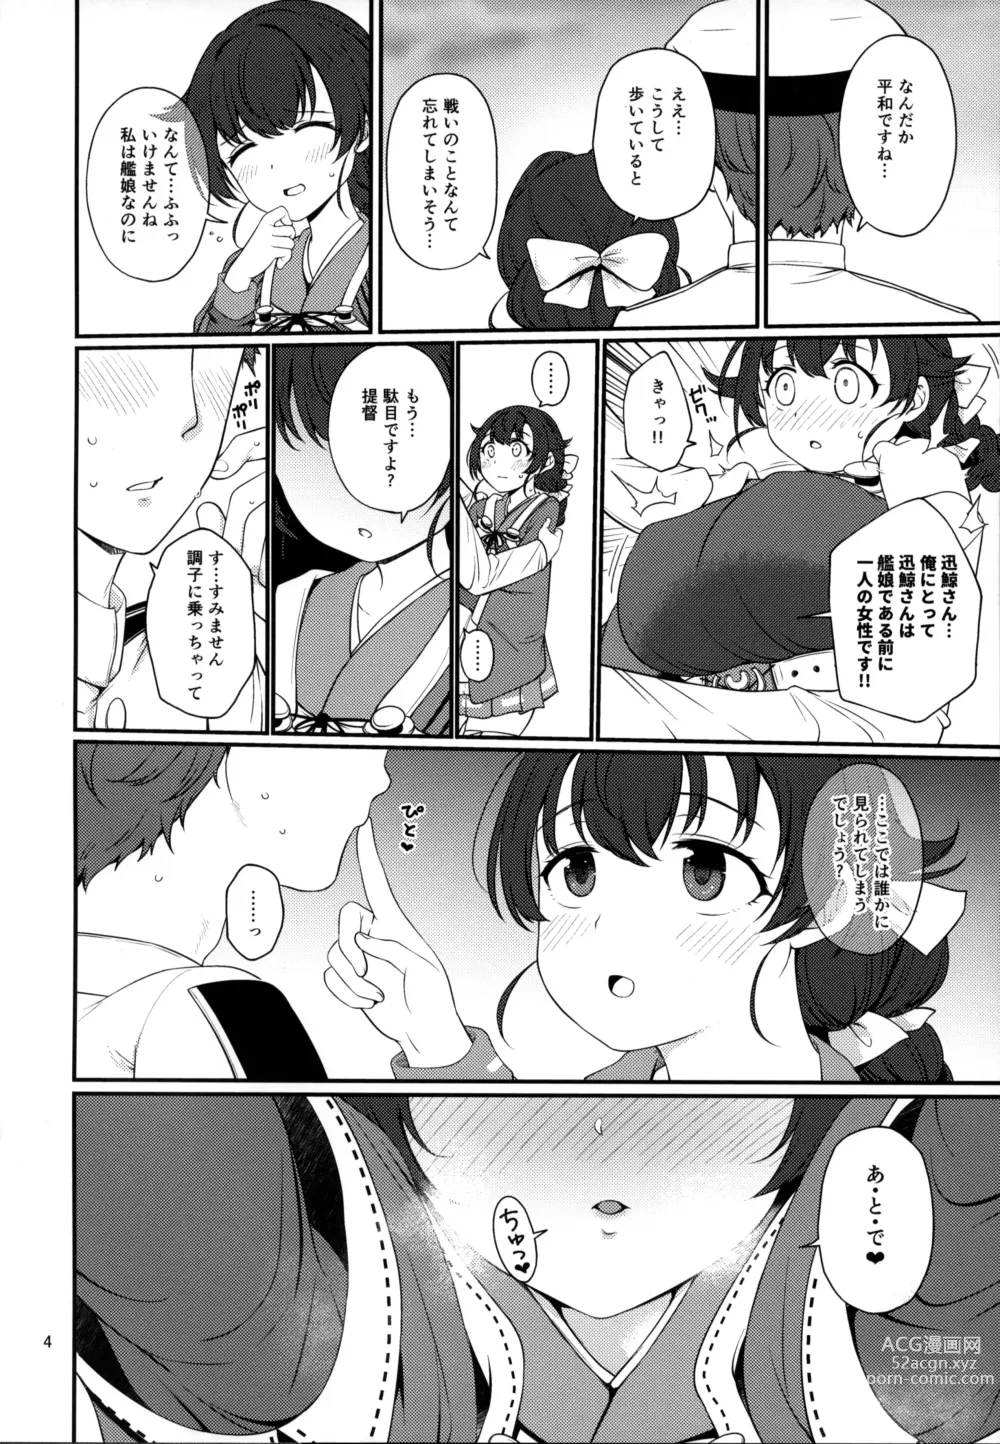 Page 3 of doujinshi Yoru no Jingei